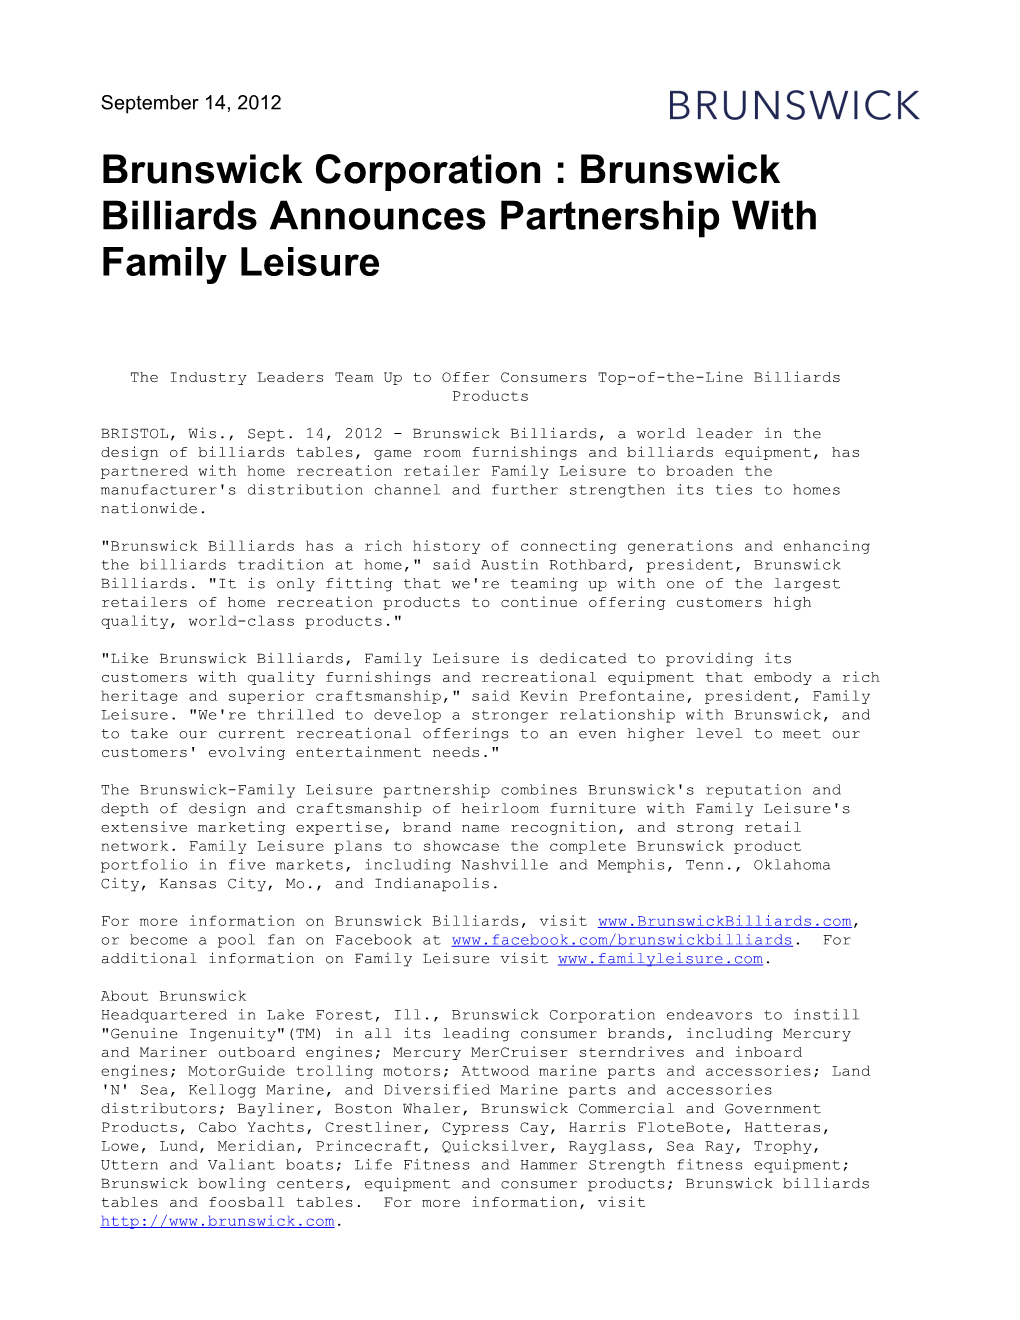 Brunswick Corporation : Brunswick Billiards Announces Partnership with Family Leisure